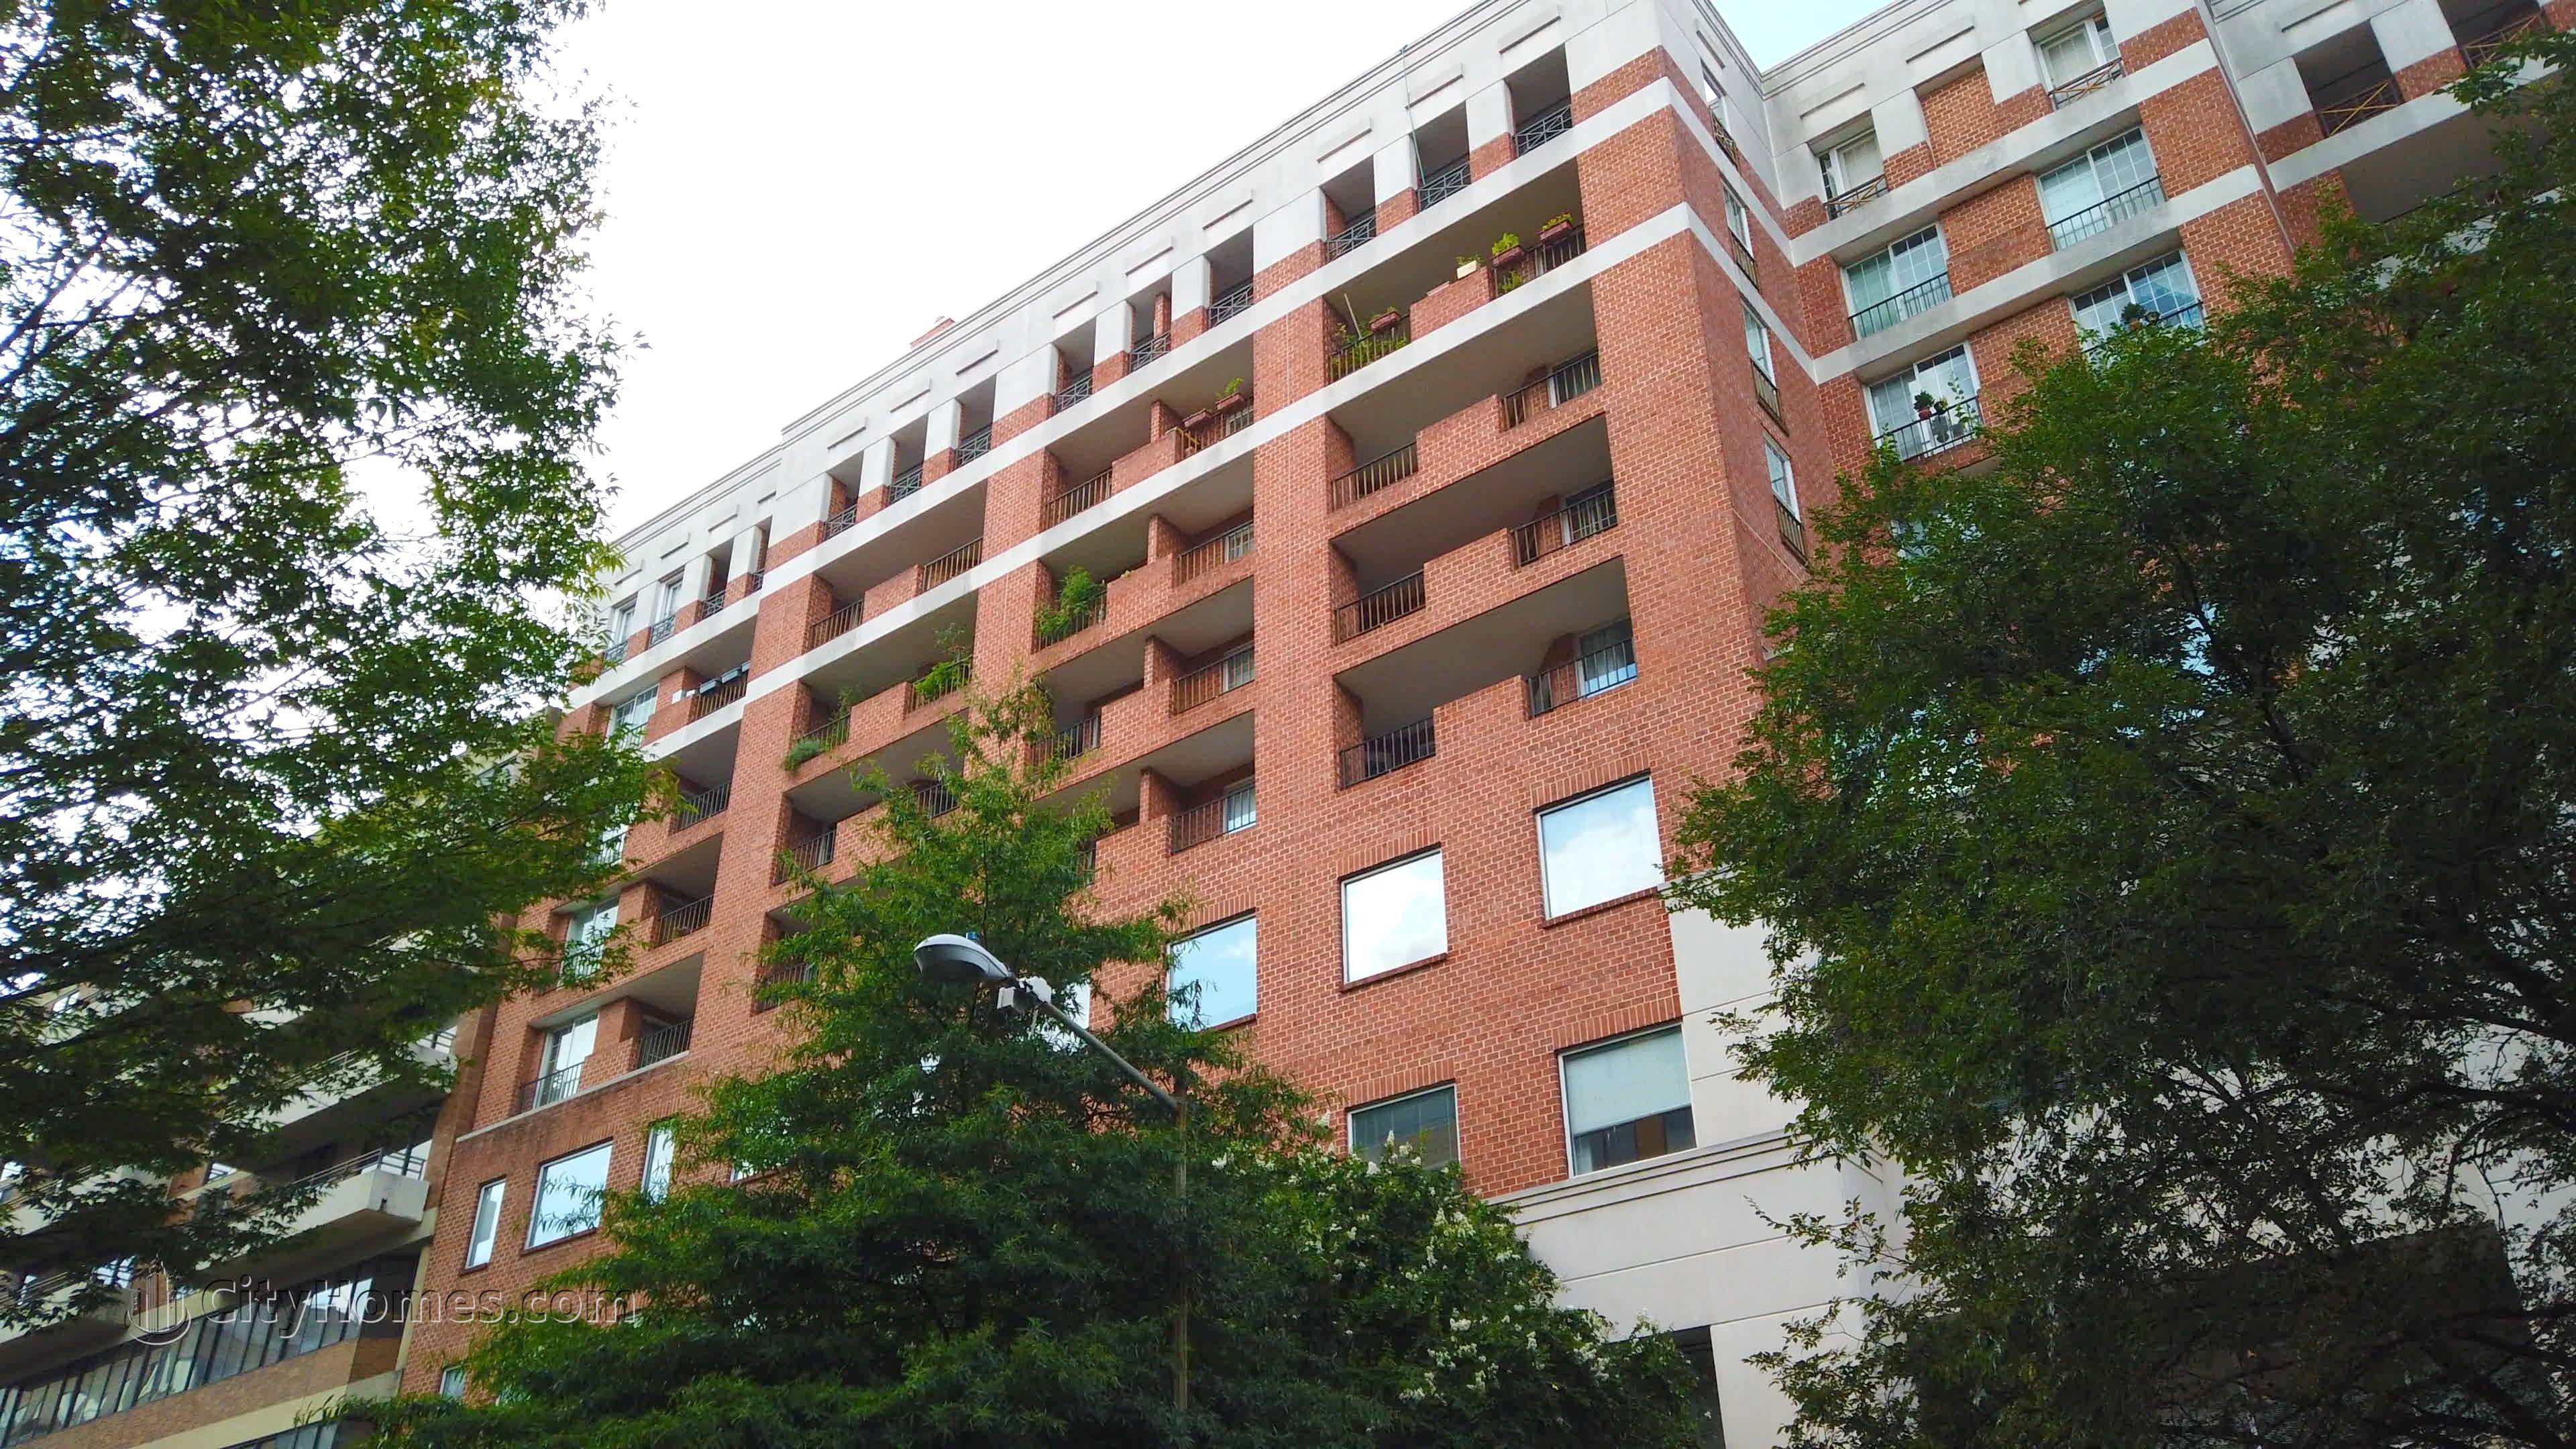 7. Metropolitan Condos gebouw op 1230 23rd St NW, West End, Washington, DC 20037